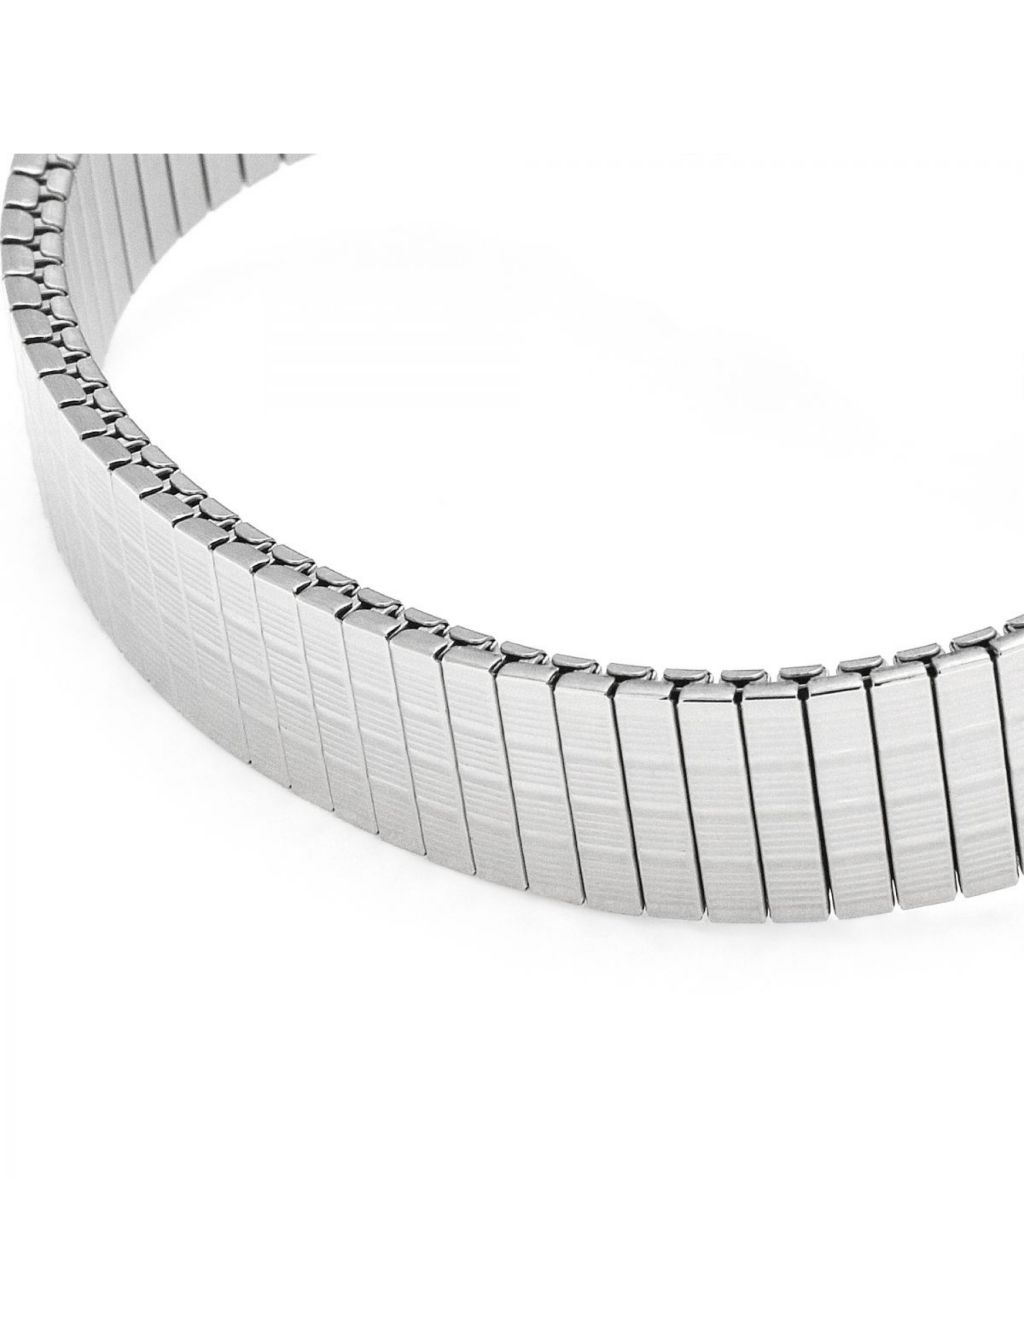 Sekonda Stainless Steel Expandable Bracelet Watch image 4